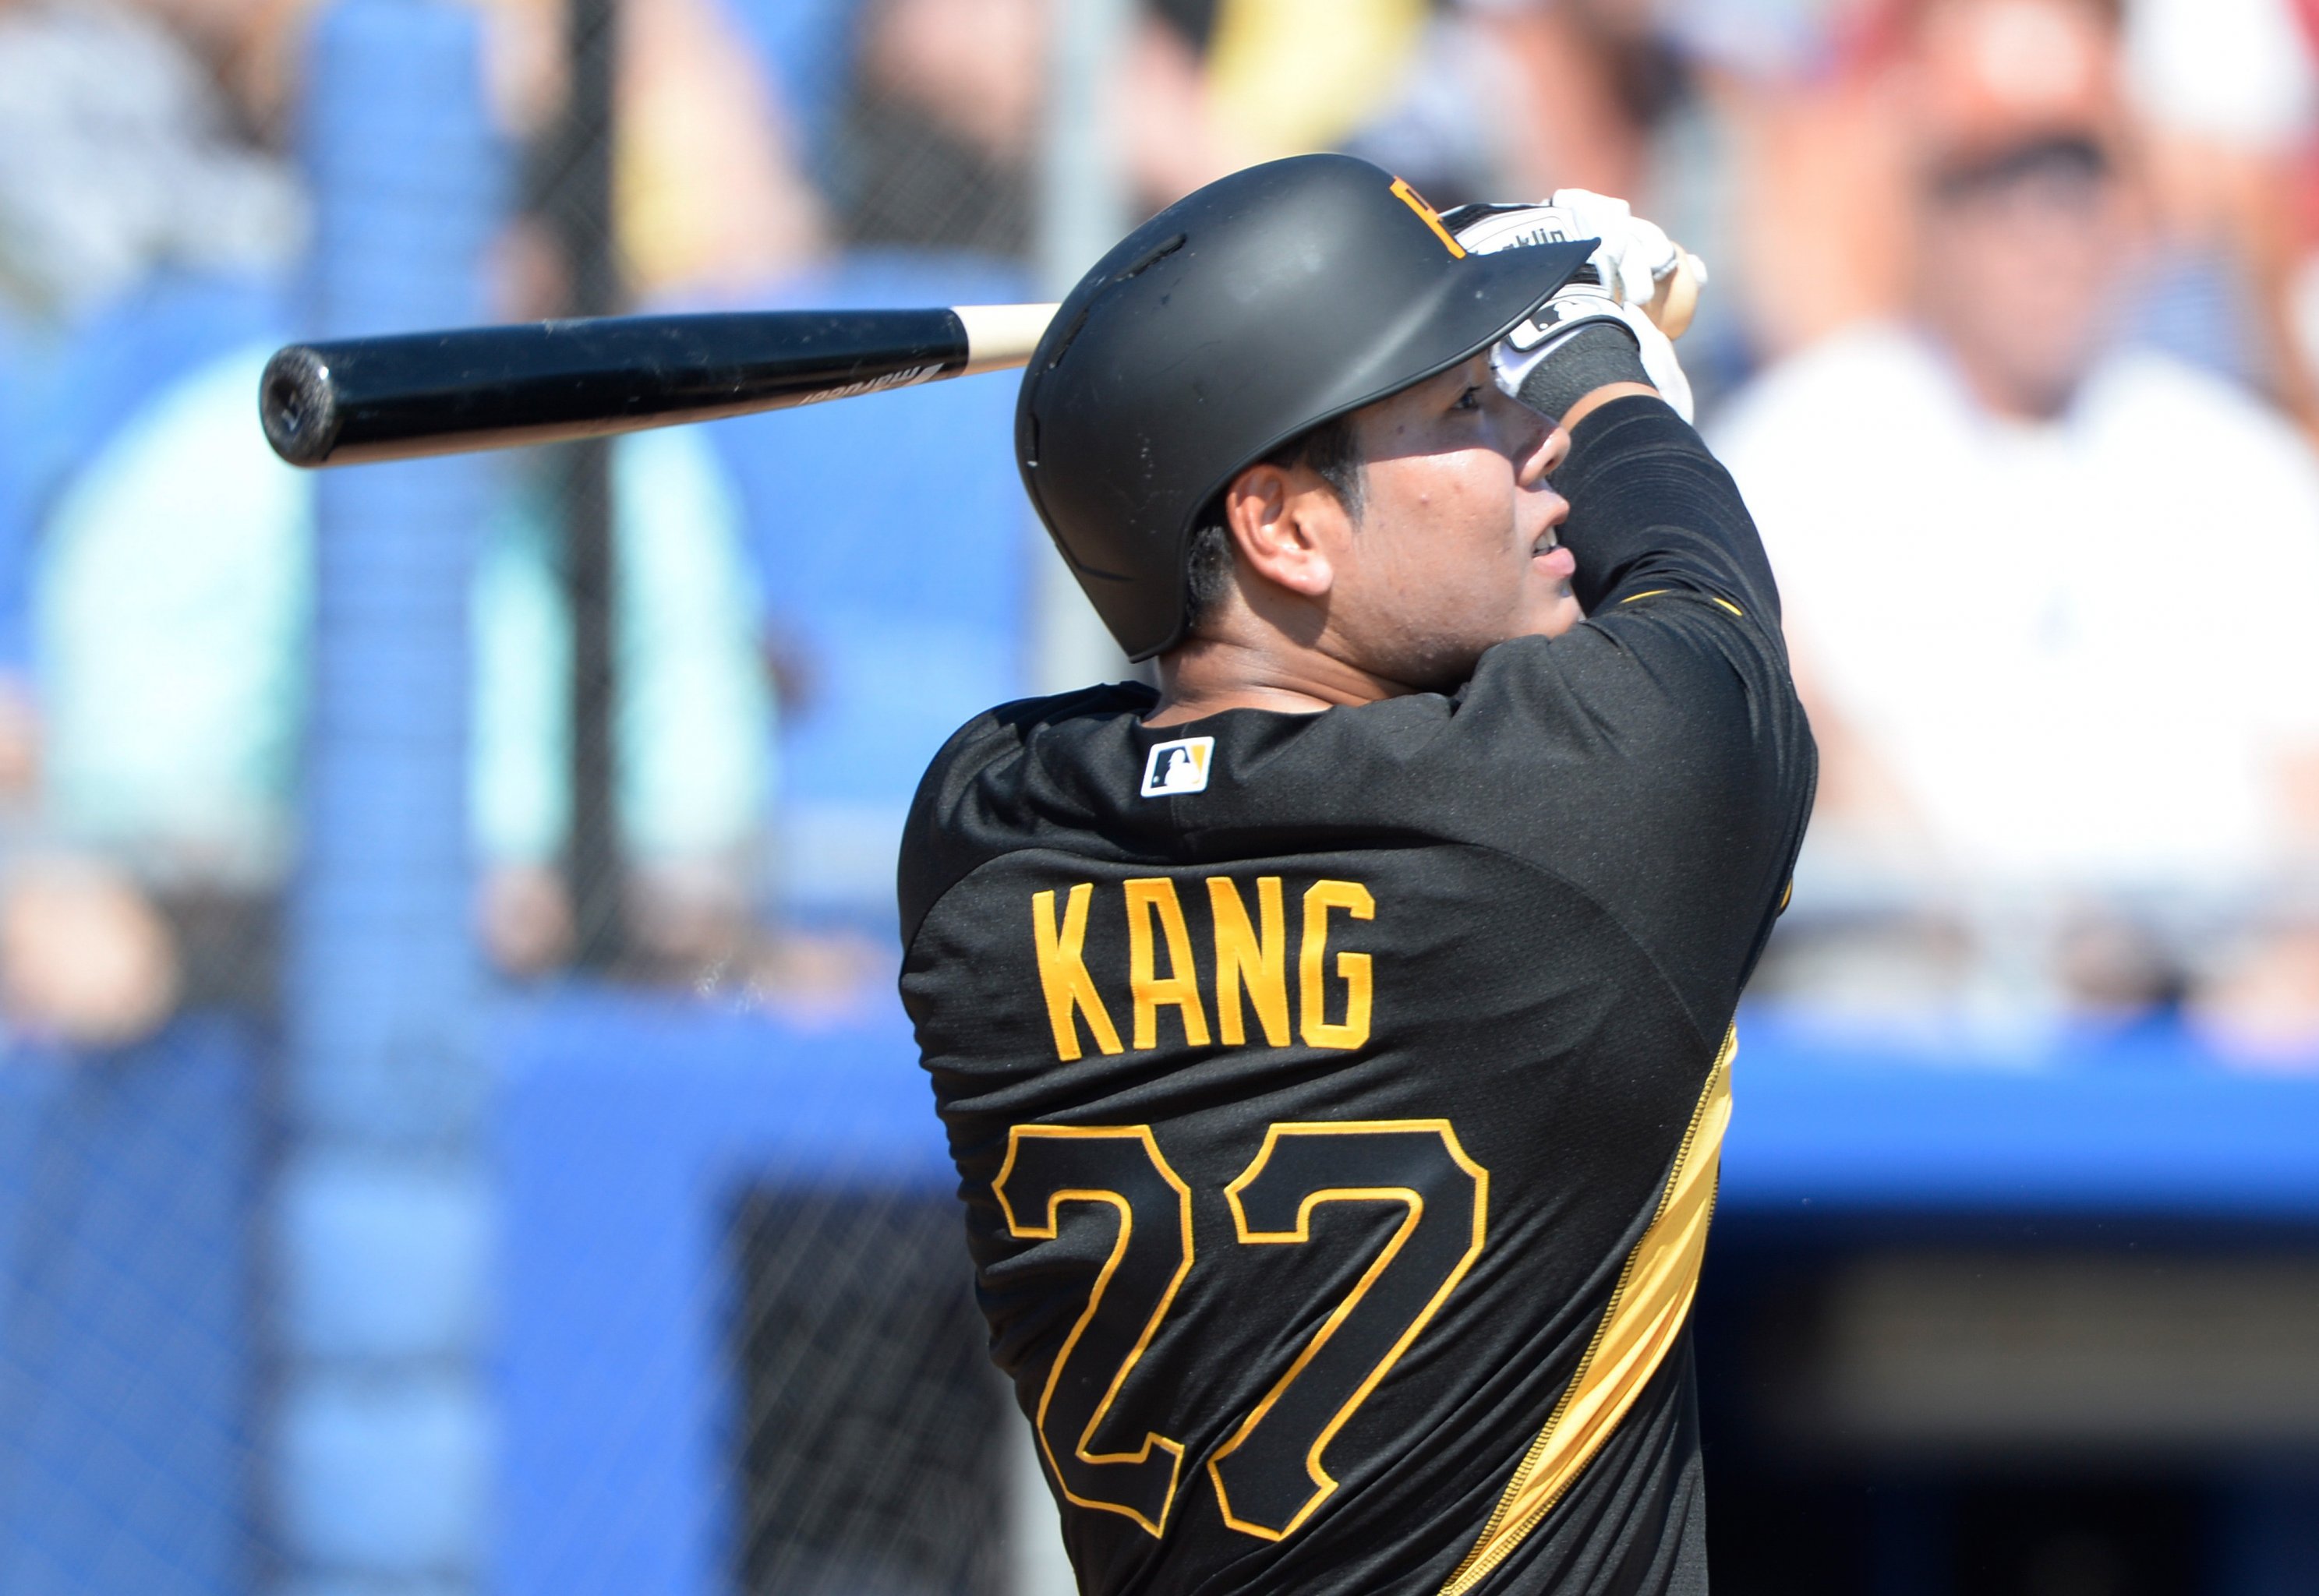 Jung Ho Kang starts at shortstop, hits Miller Park scoreboard in